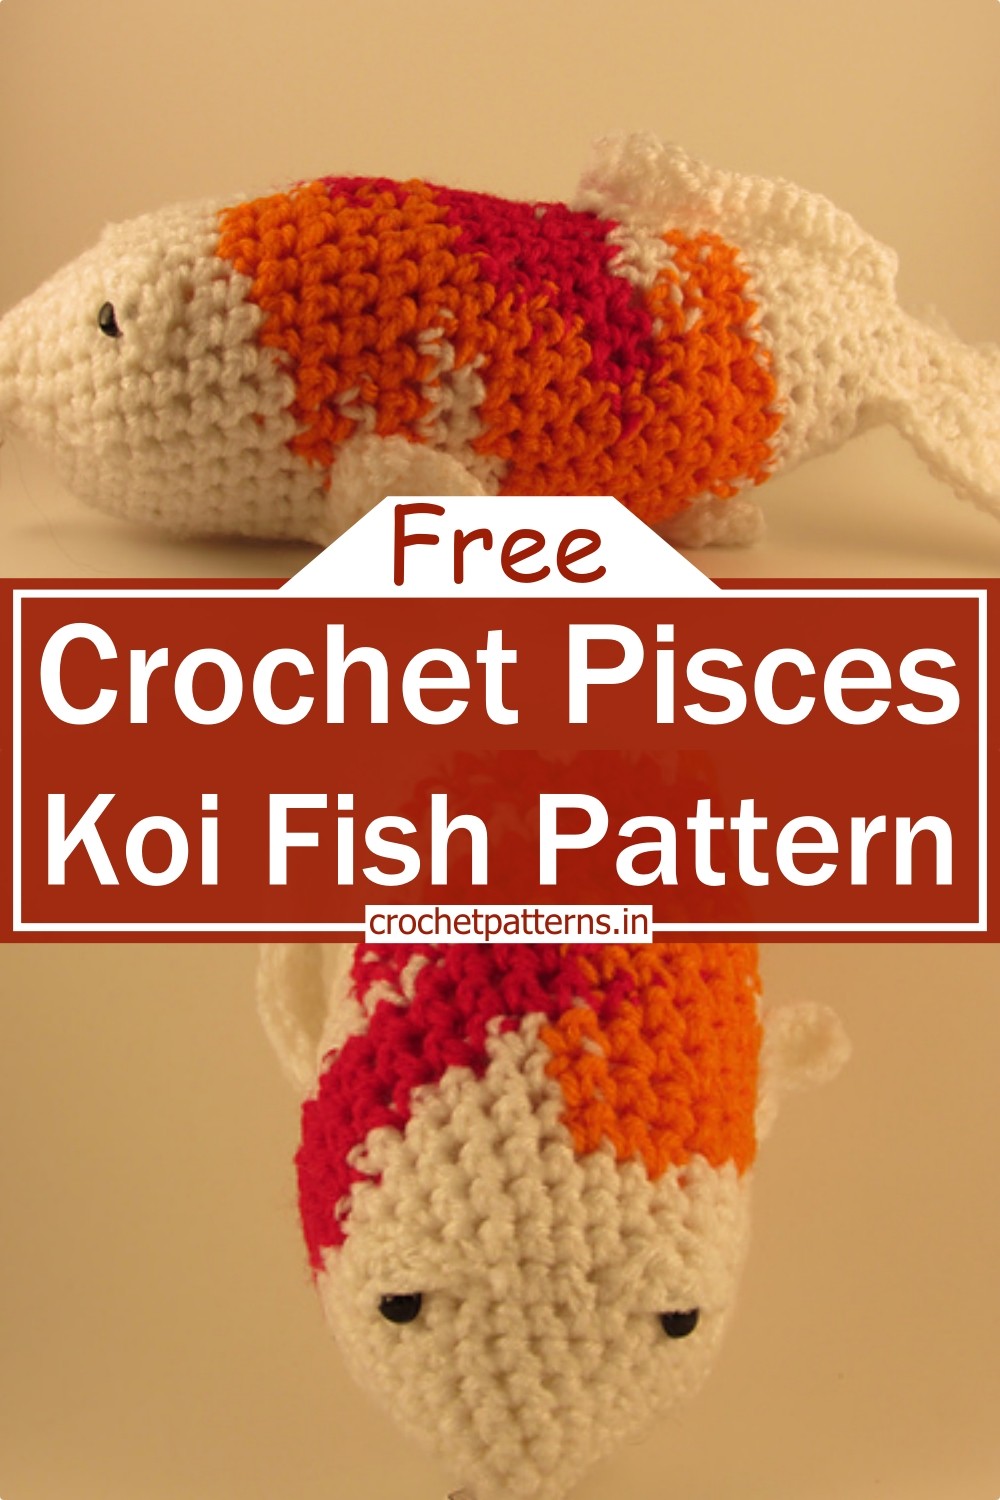 Crochet Pisces Koi Fish Pattern